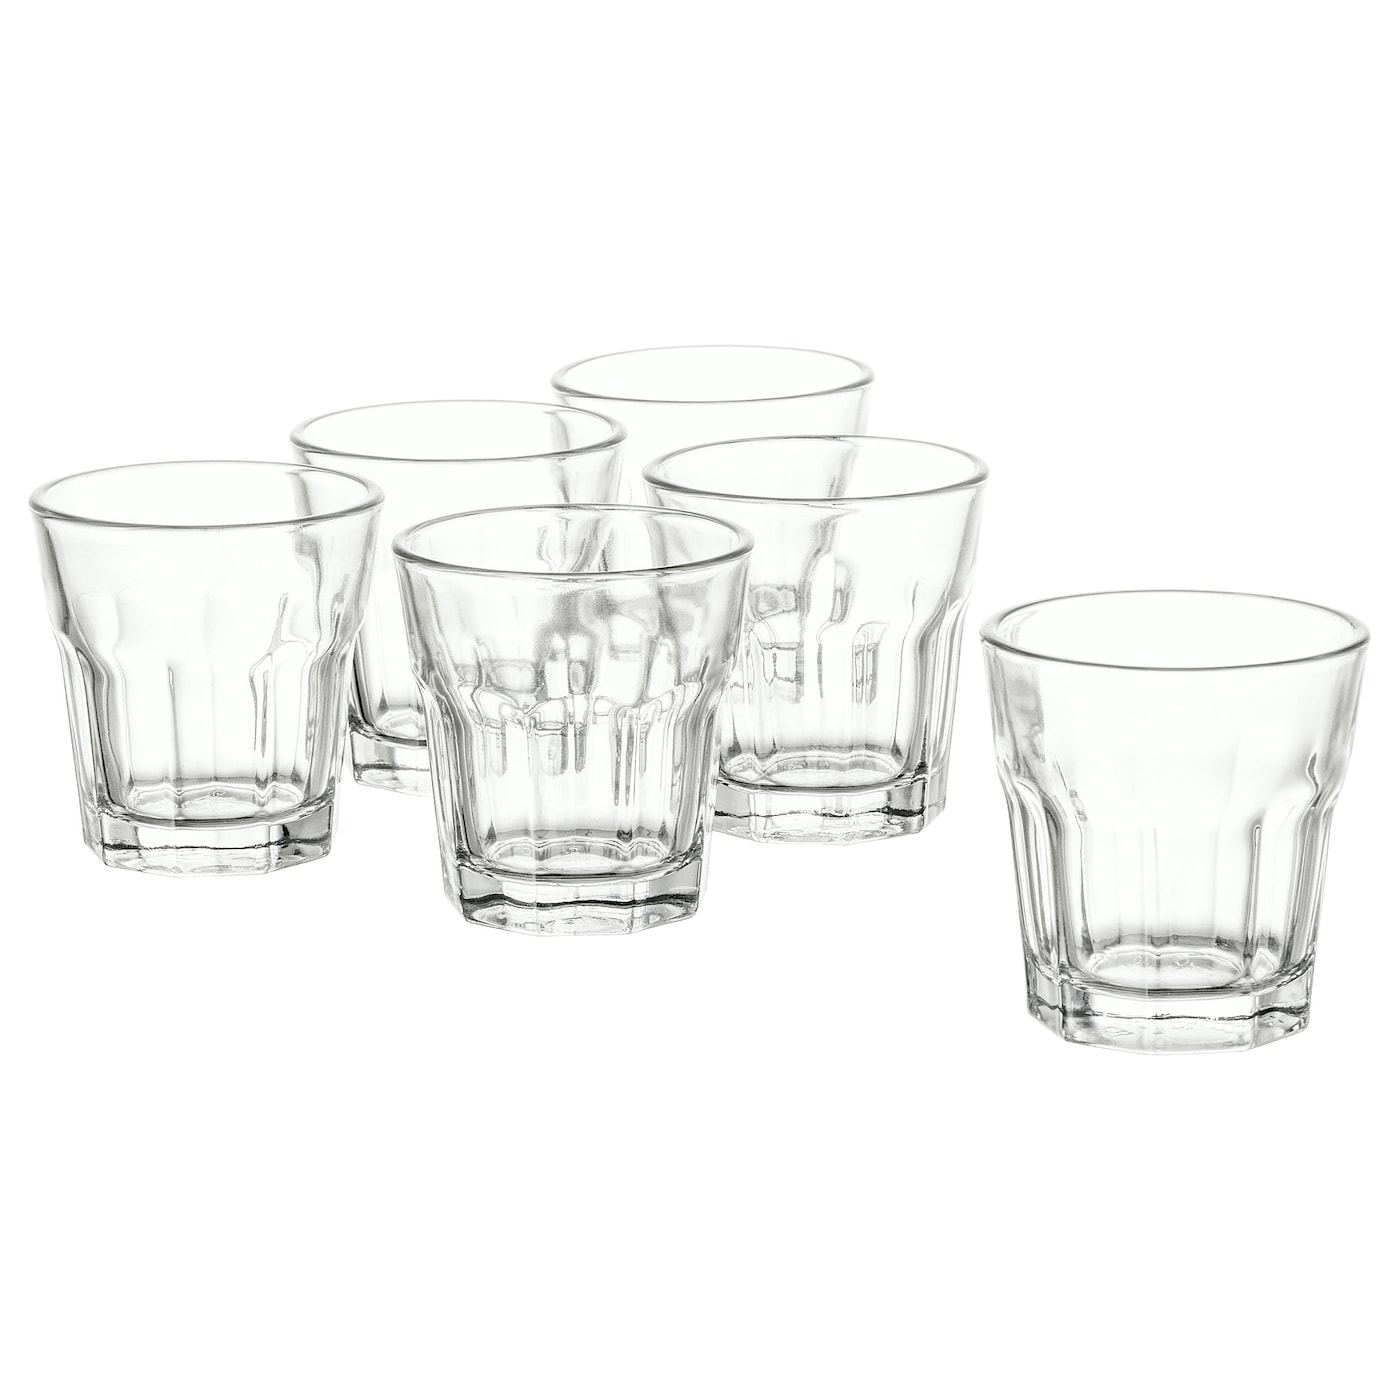 Набор стаканов, 6 шт. - IKEA POKAL, 50 мл, прозрачное стекло, ПОКАЛ ИКЕА